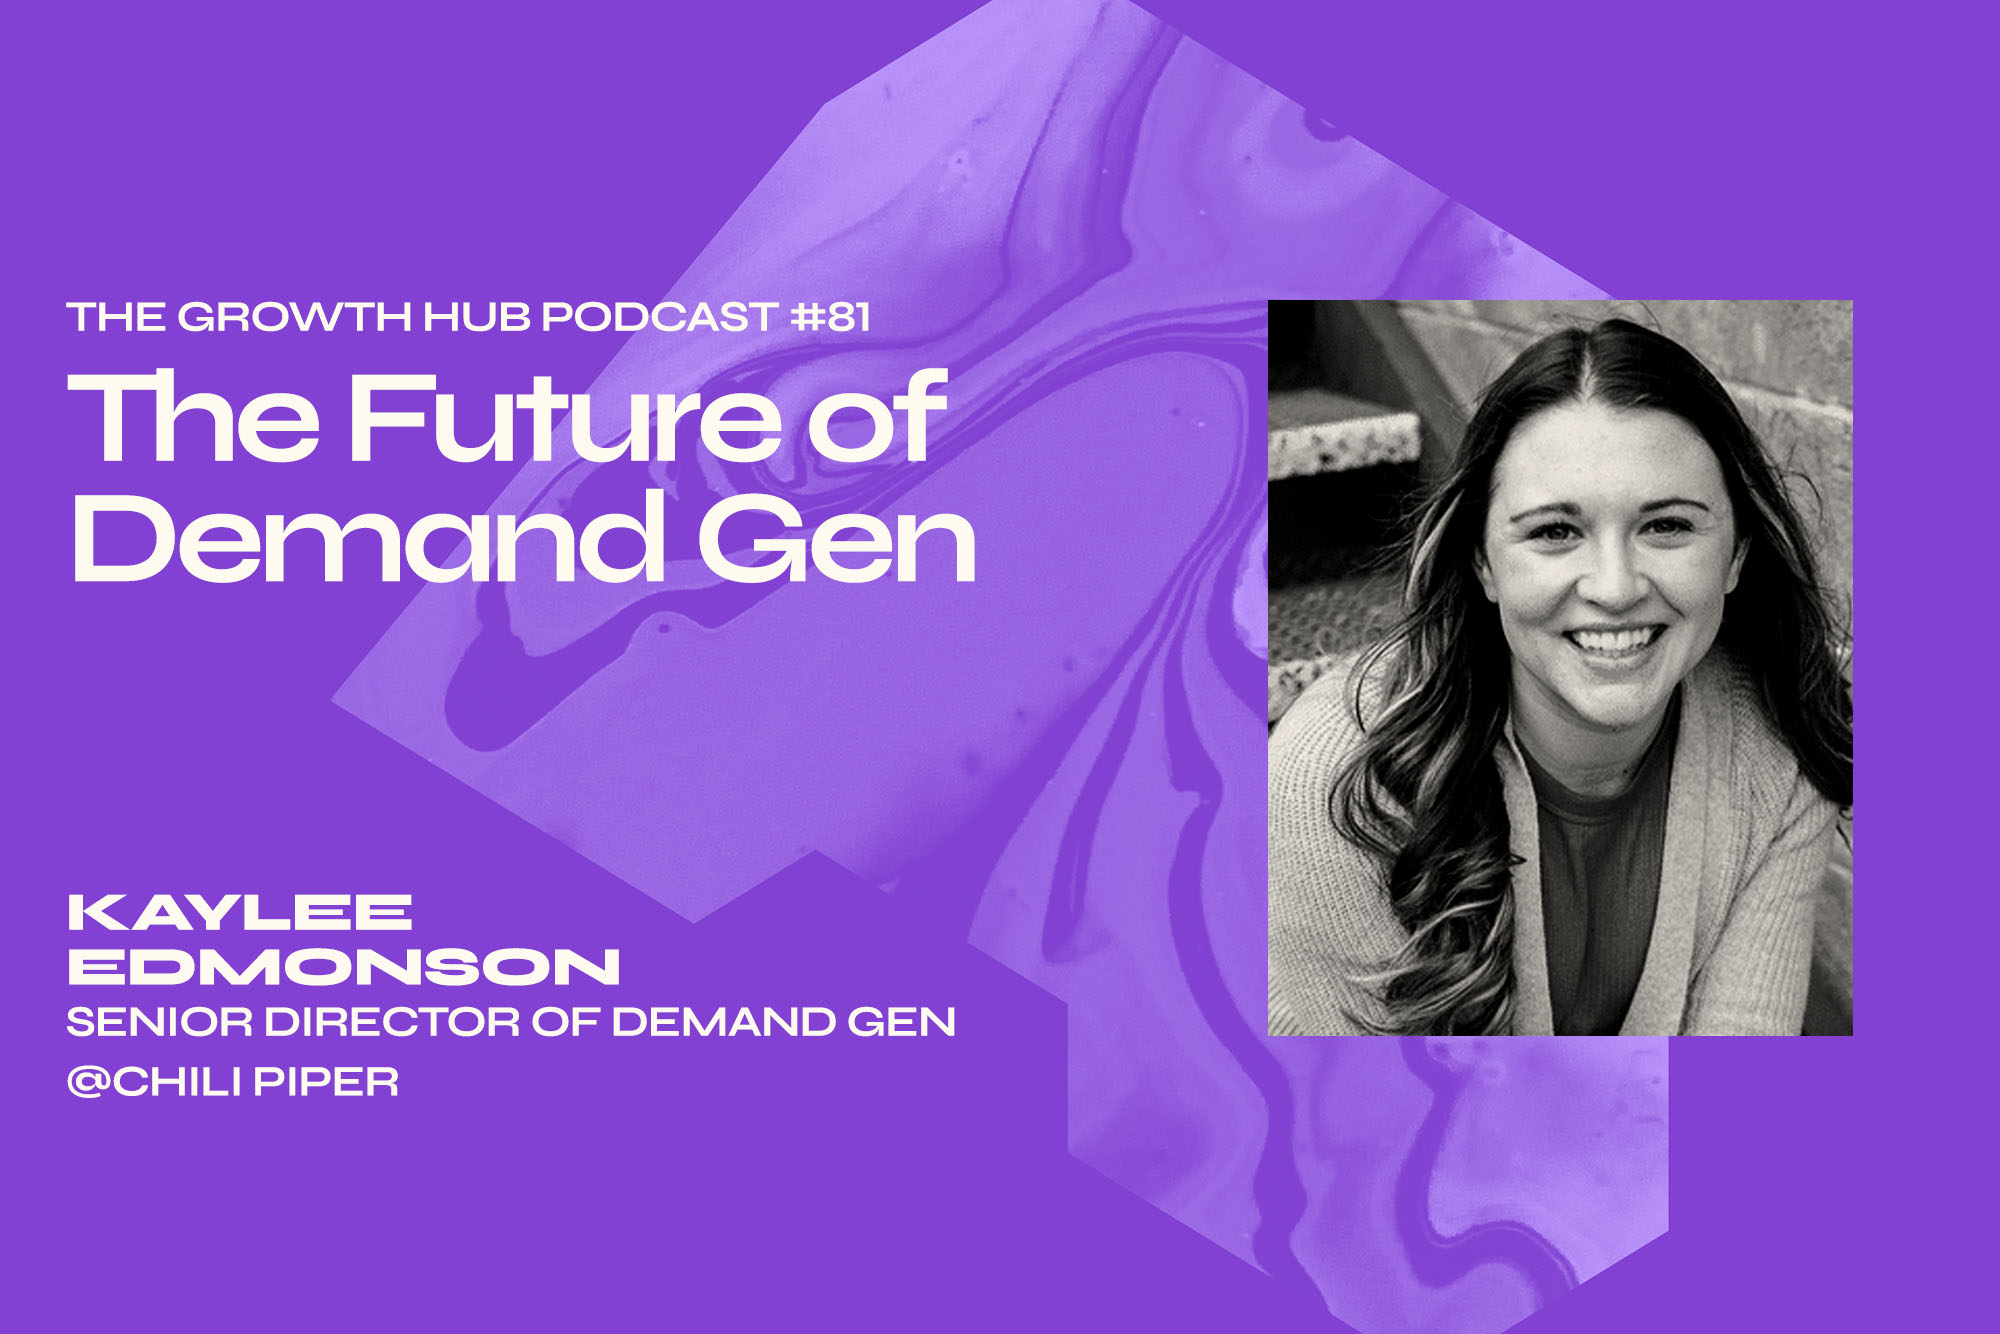 The Future of Demand Gen with Kaylee Edmondson